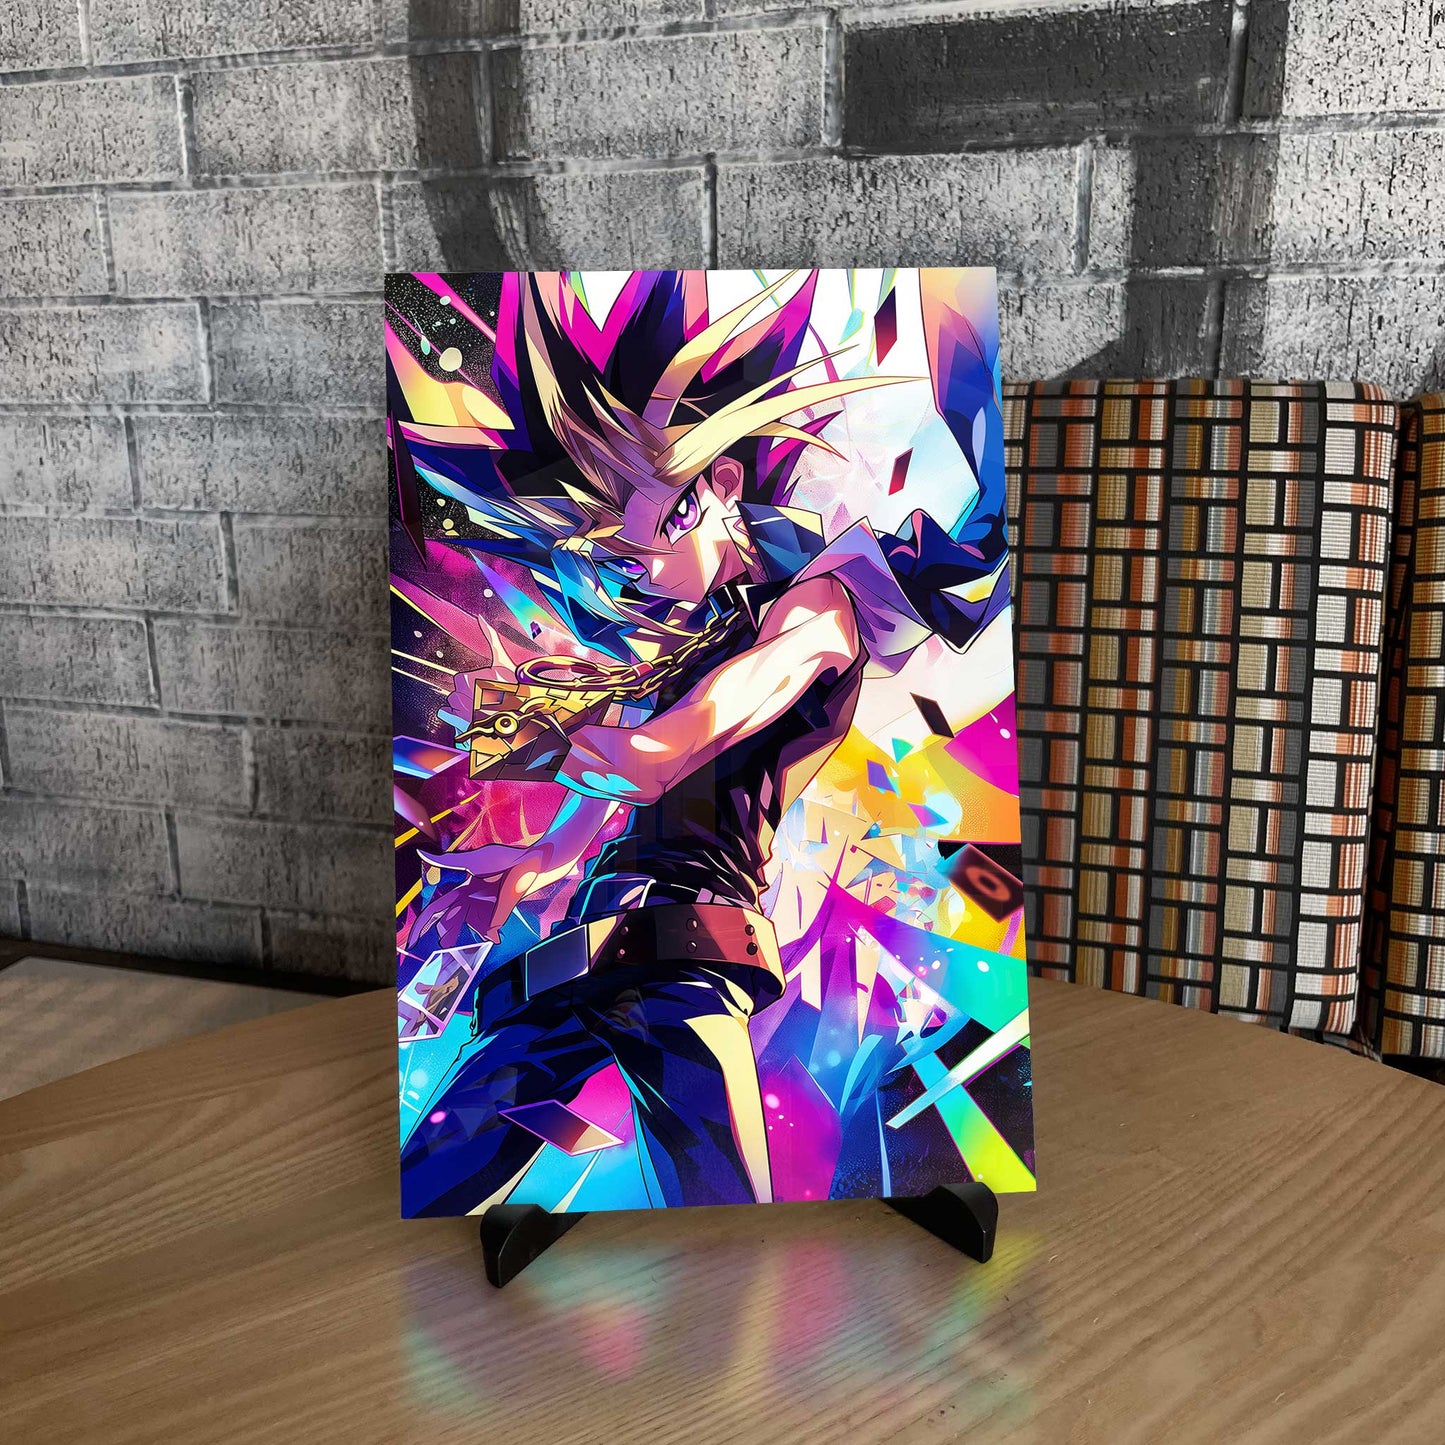 Yu-Gi-Oh! Yami Yugi Vibrant Prizm Metal Print